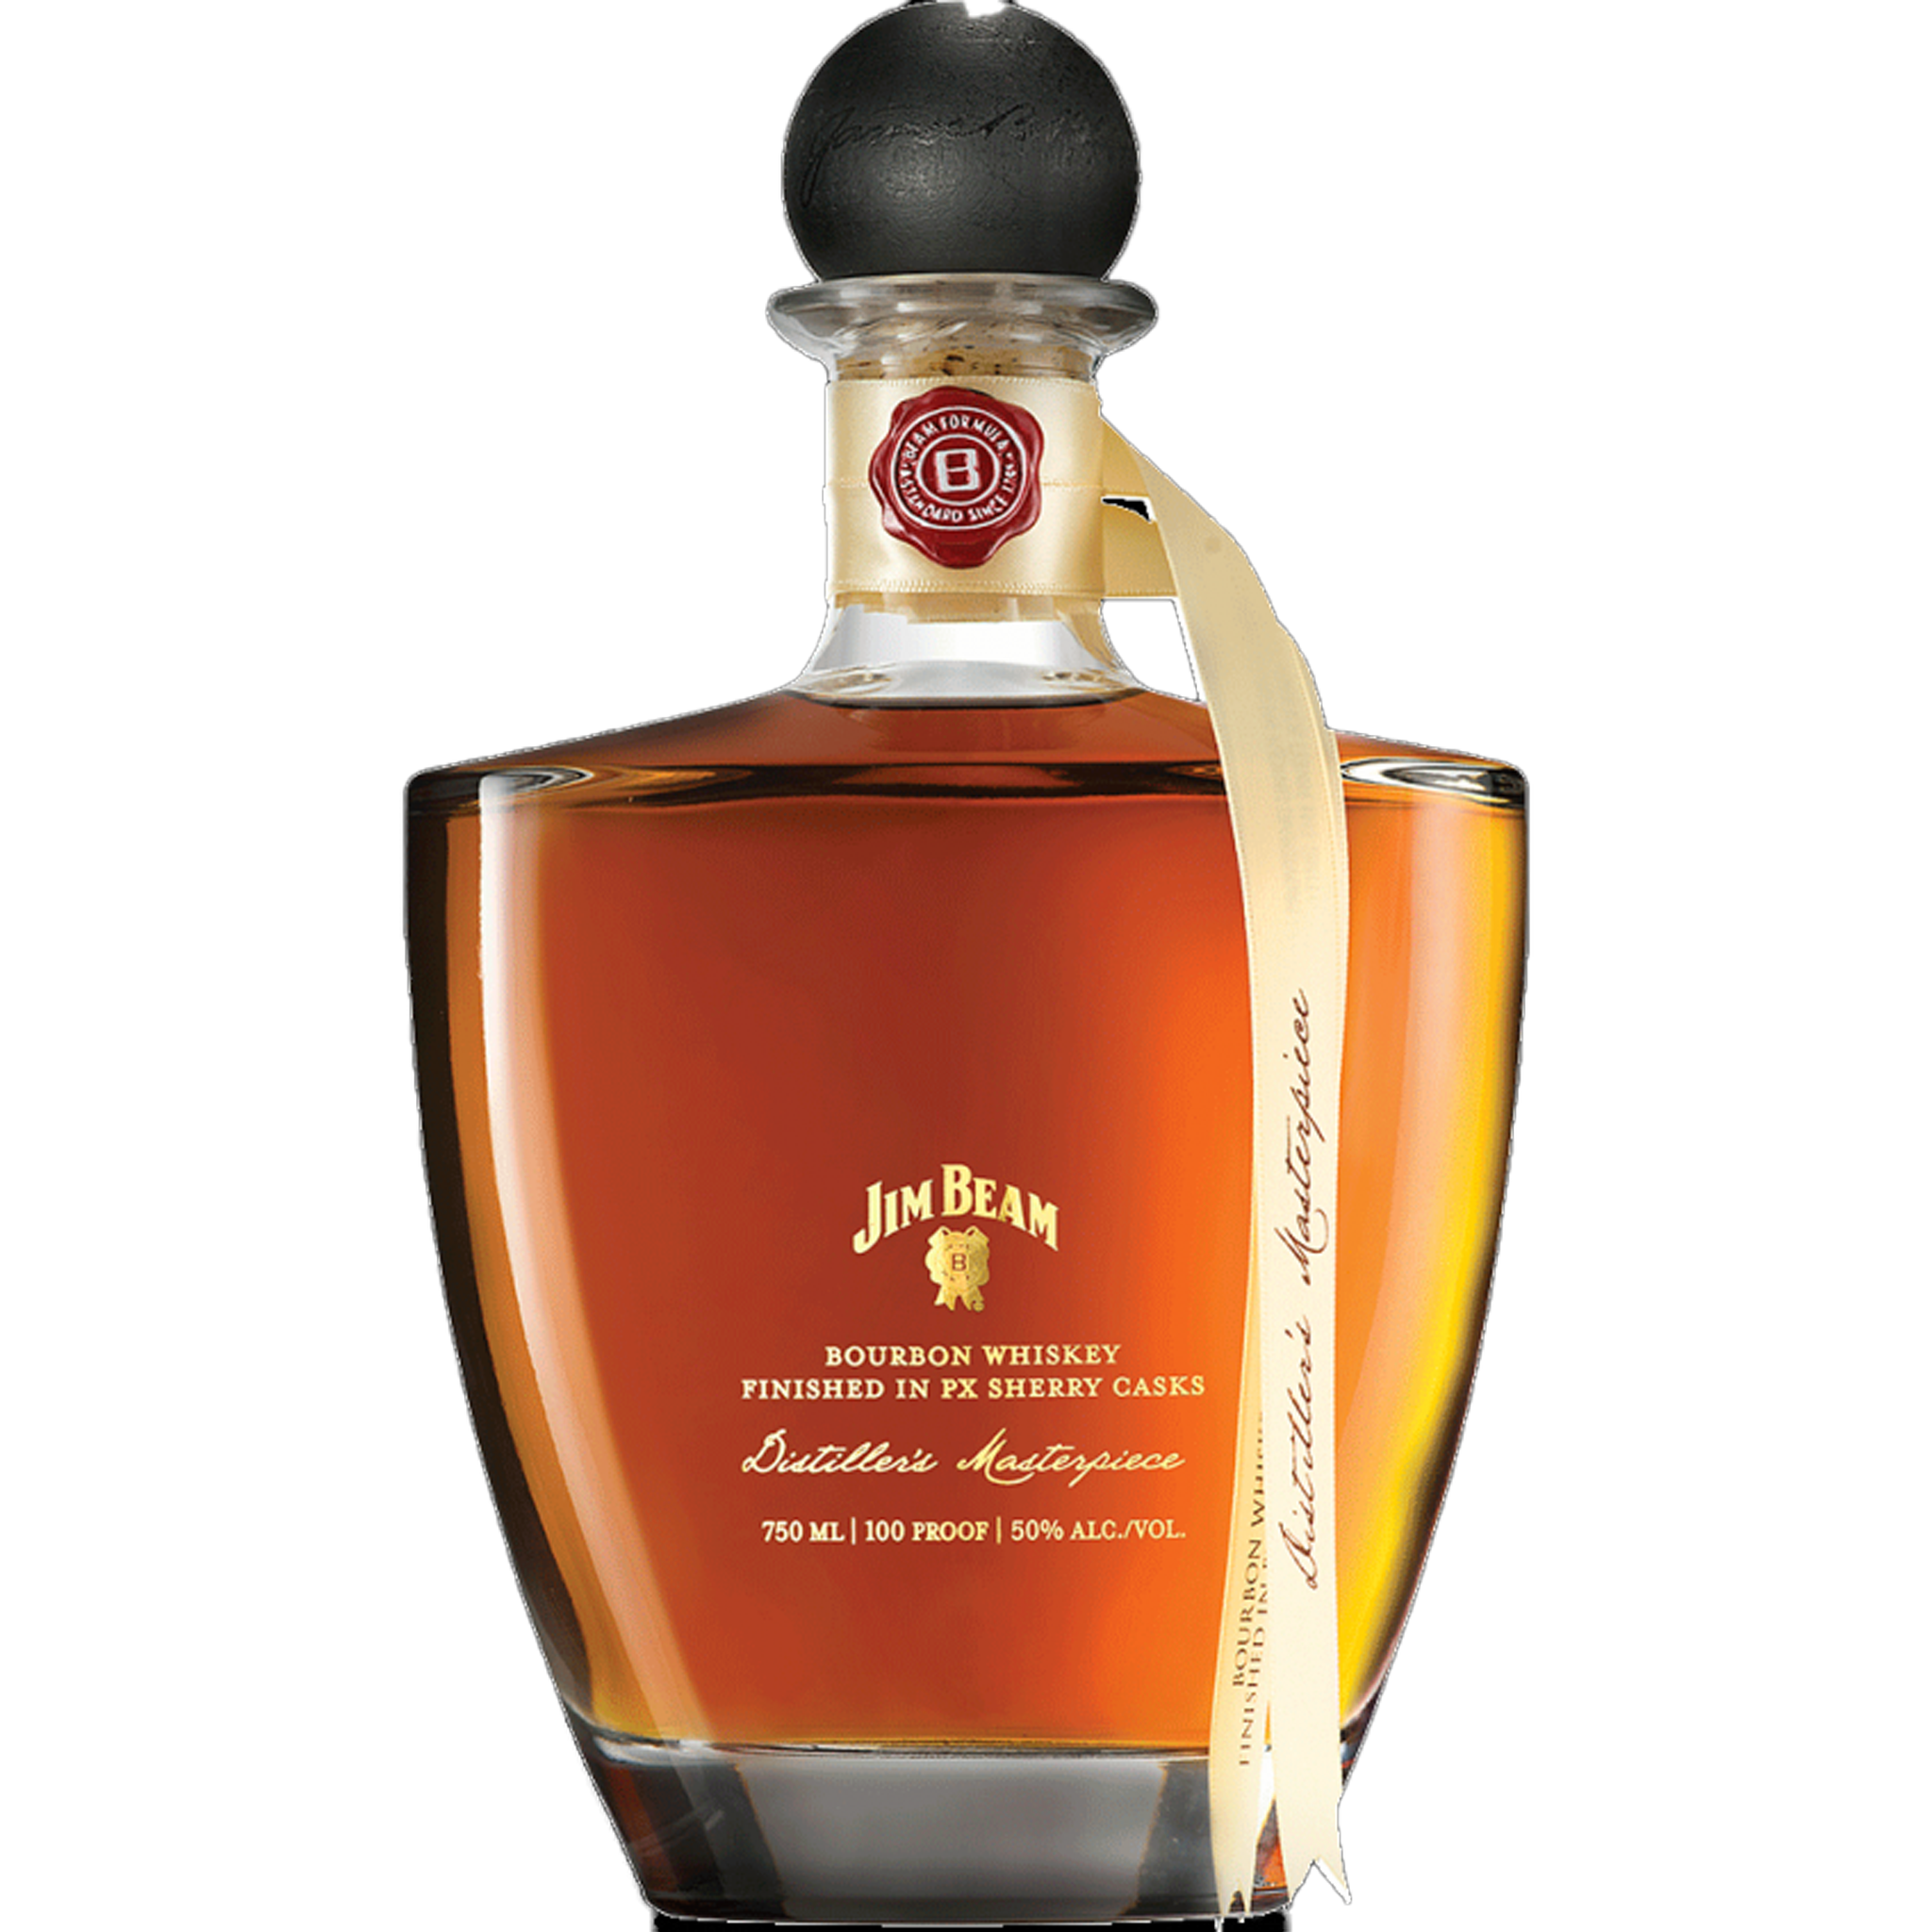 Jim Beam Distiller's Masterpiece Bourbon Whiskey Finished in PX Sherry Casks (750ml)